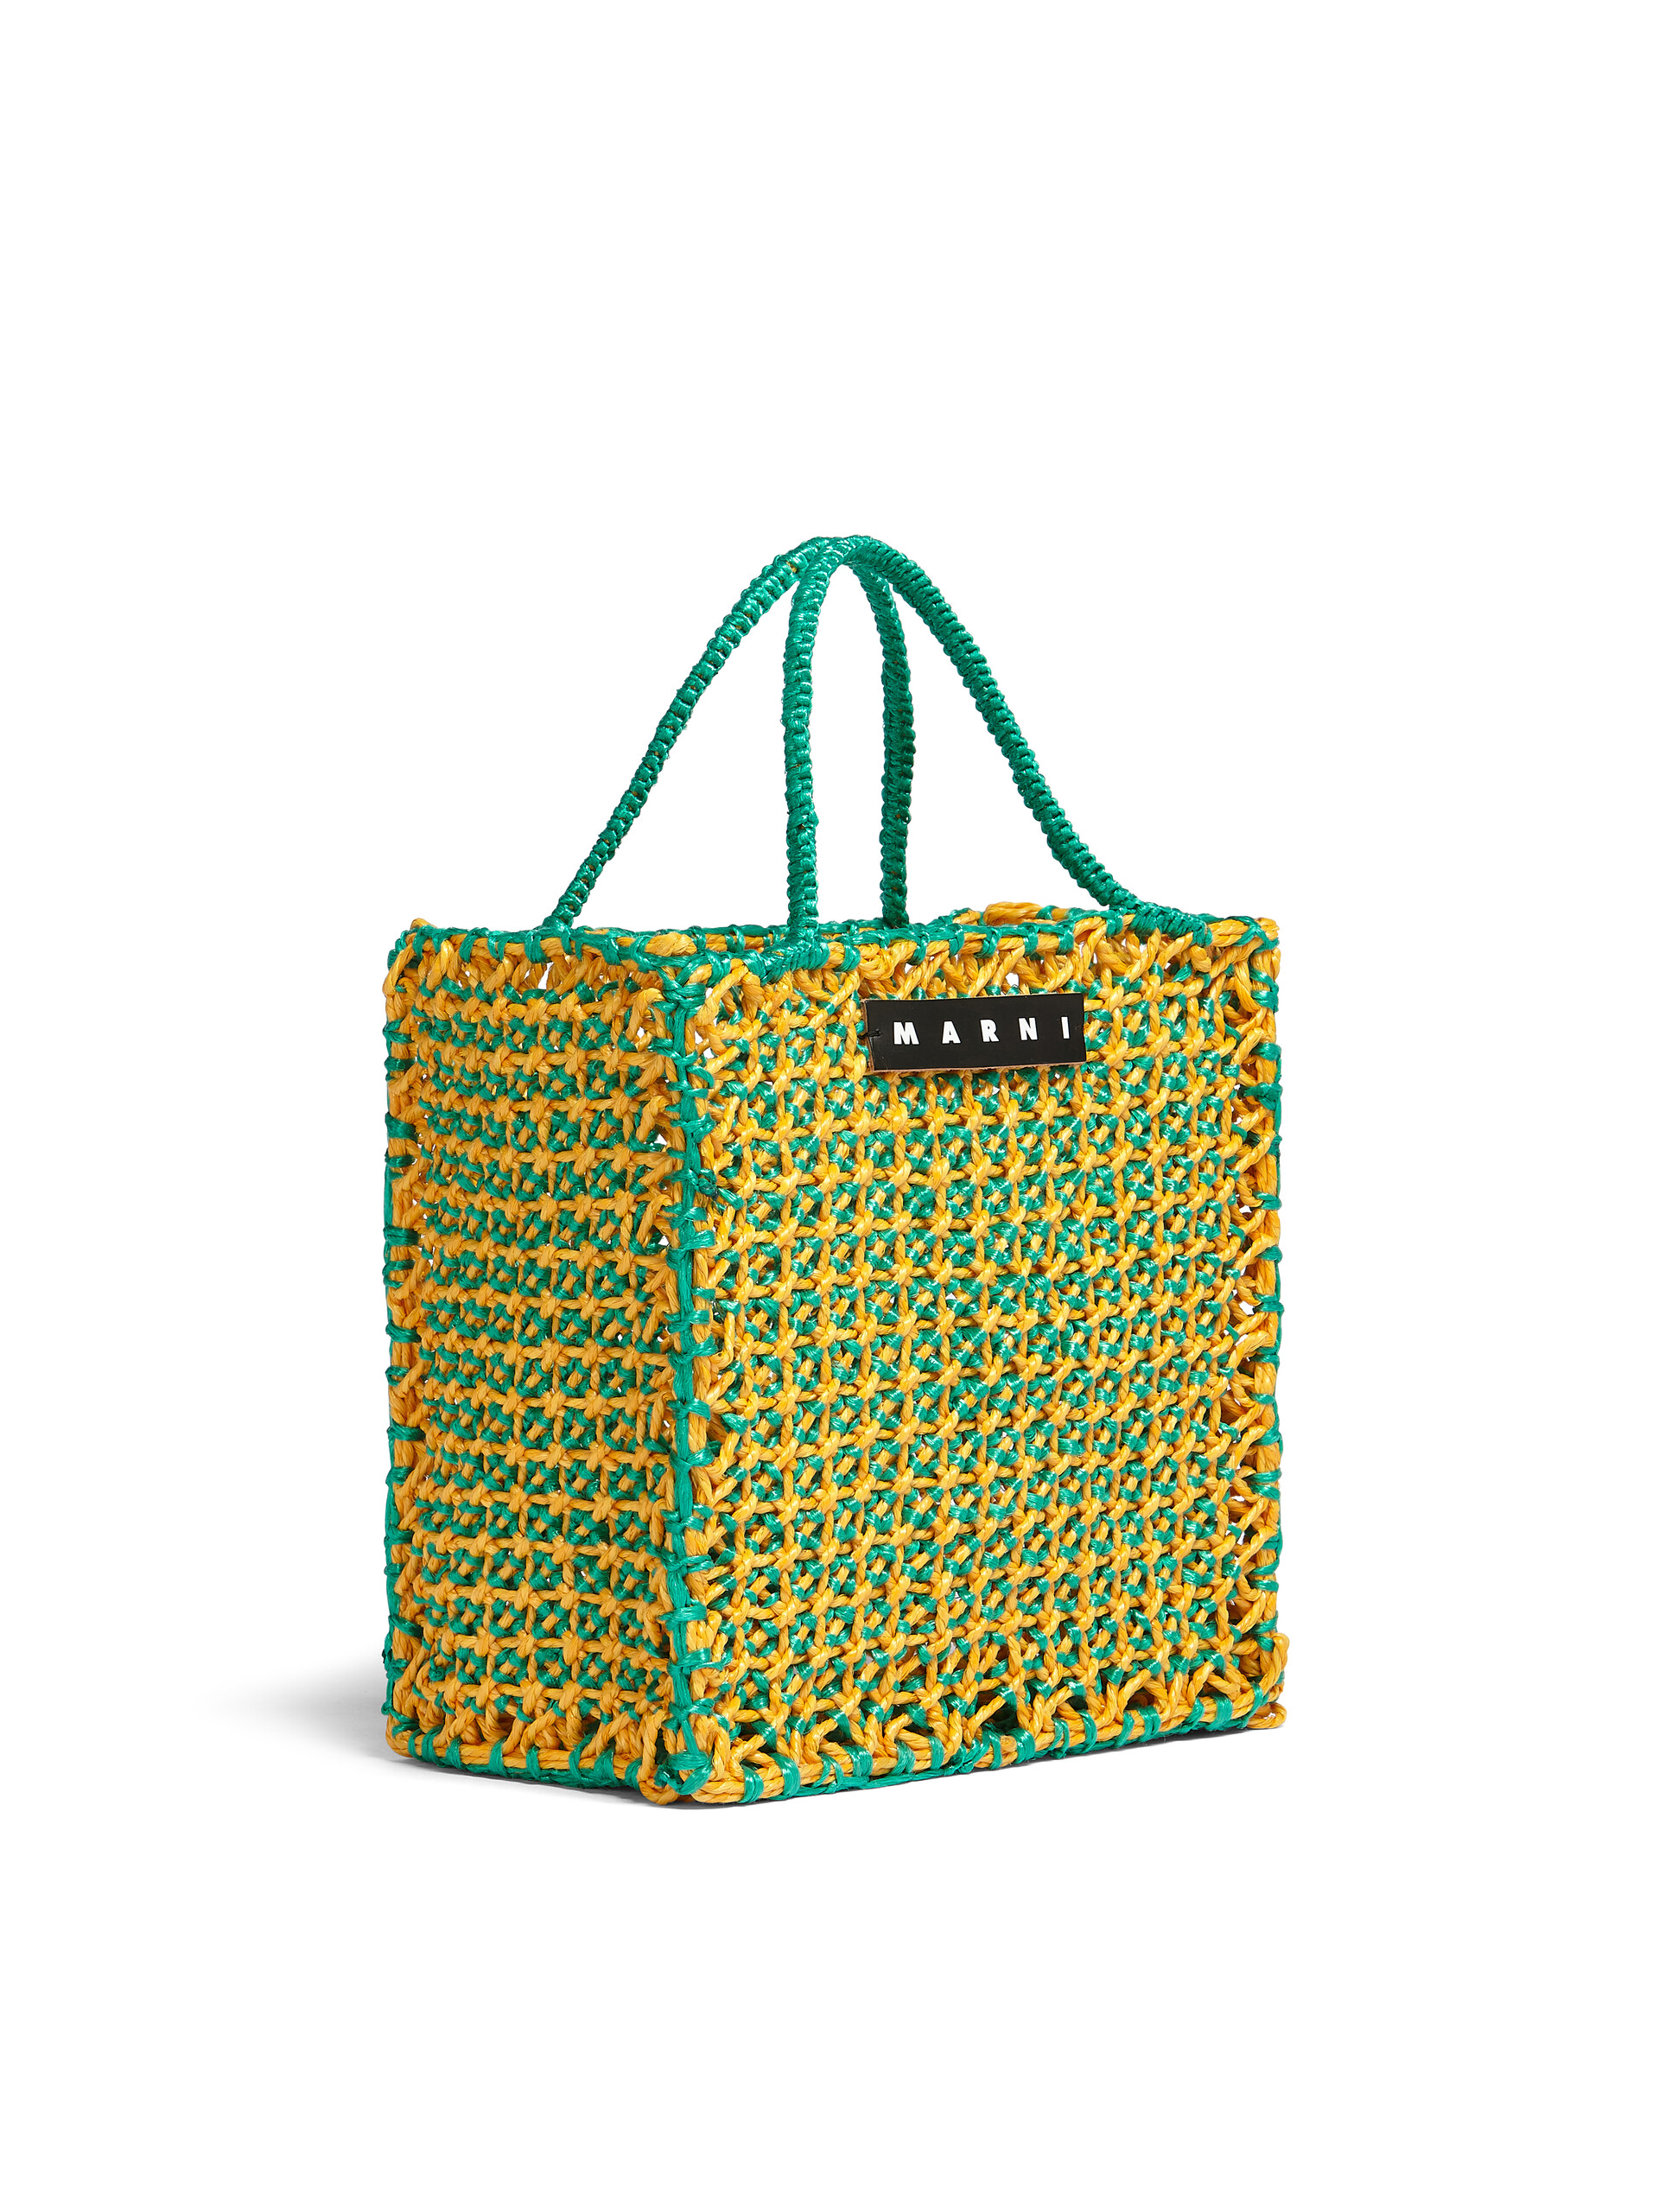 MARNI MARKET JURTA large bag in green and yellow crochet - Shopping Bags - Image 2